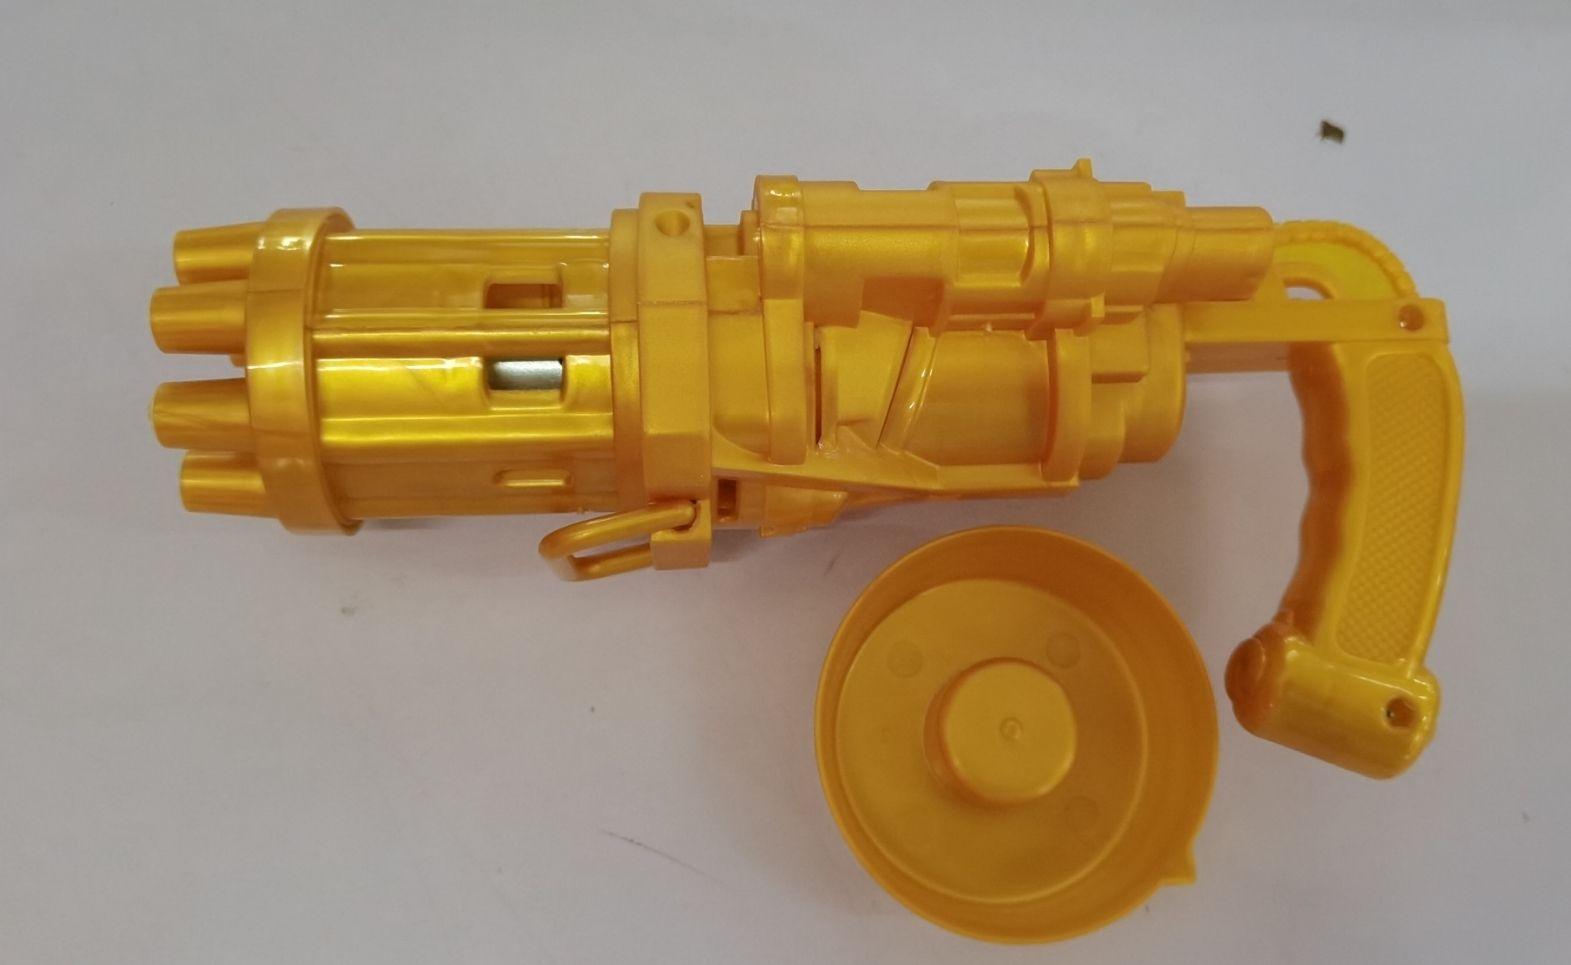 Kids Toy Bath Toys Bubble Gum Machine Toys For Kids Plastic Machine Gun Toy - Nioor